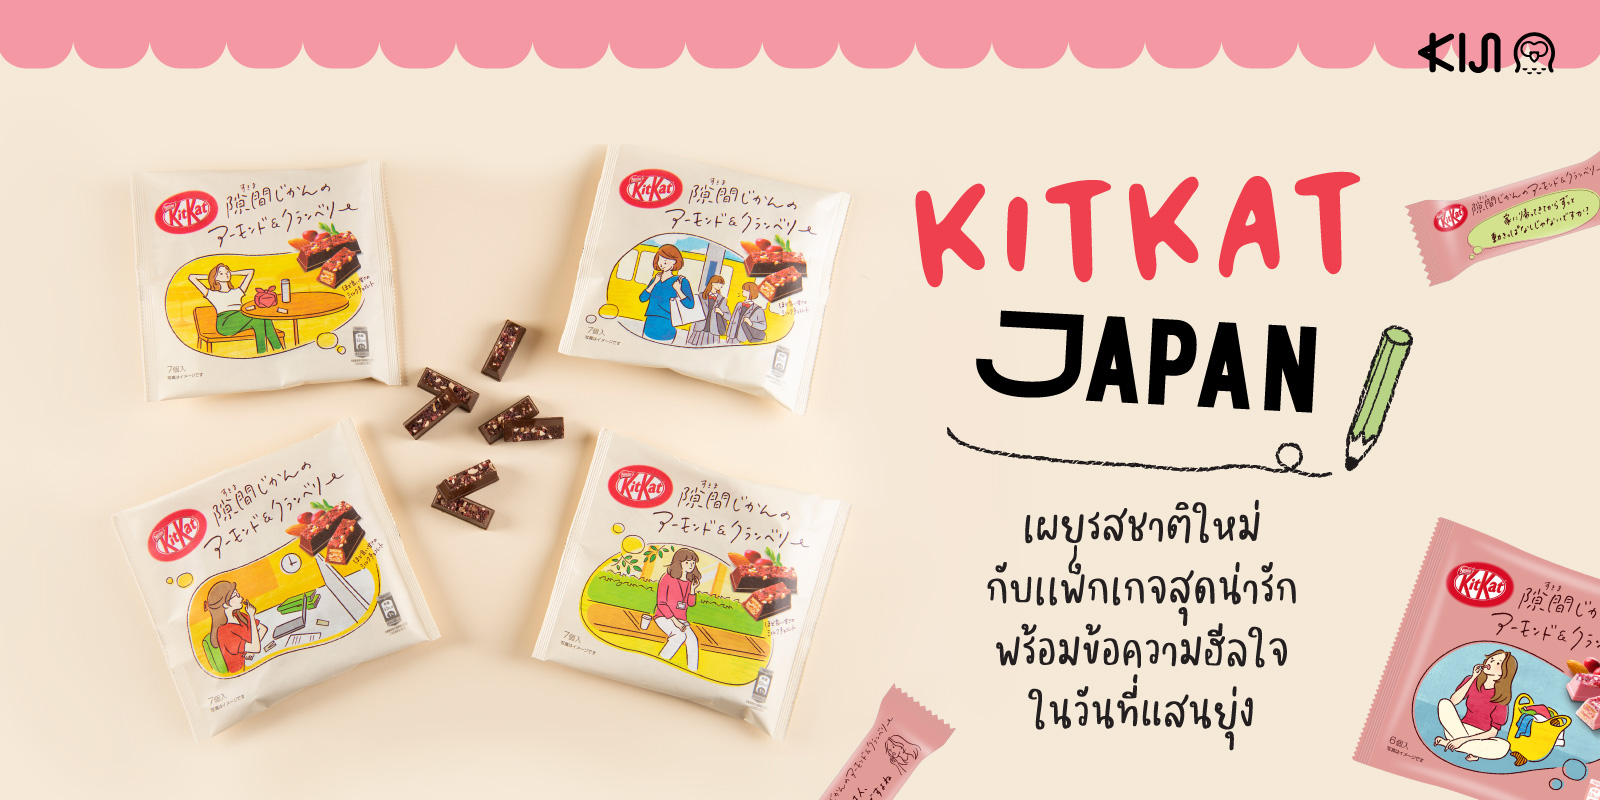 KitKat Japan เปิดตัวช็อกโกแลต 2 รสชาติใหม่ คือ KitKat Almond & Cranberry และ KitKat Almond & Cranberry Ruby